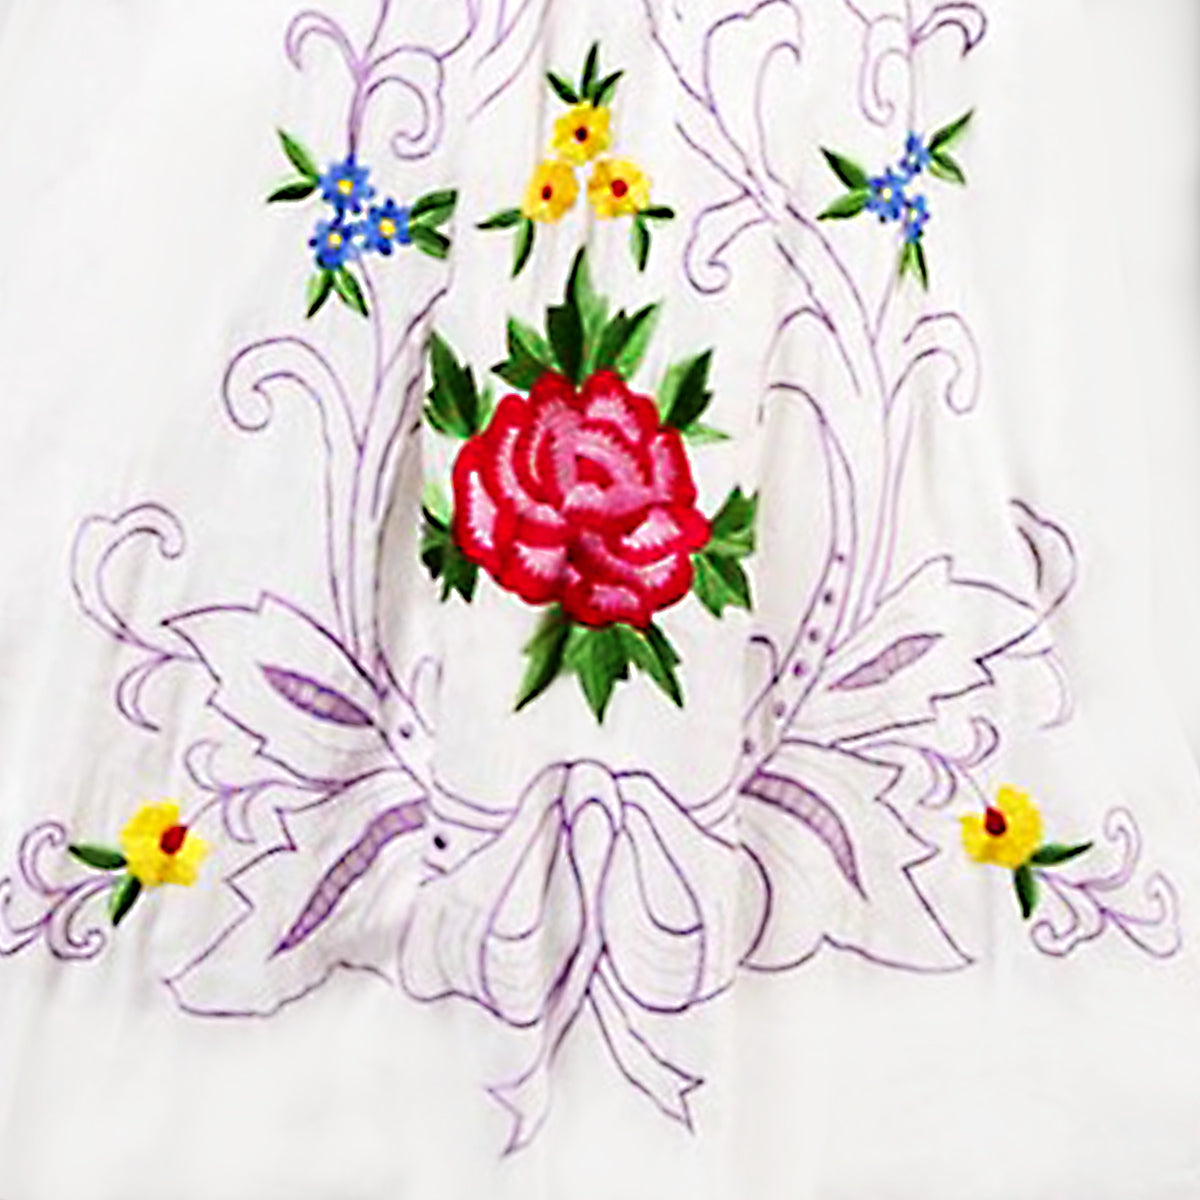 Boho Flower Embroidered White Cotton Maxi Dress